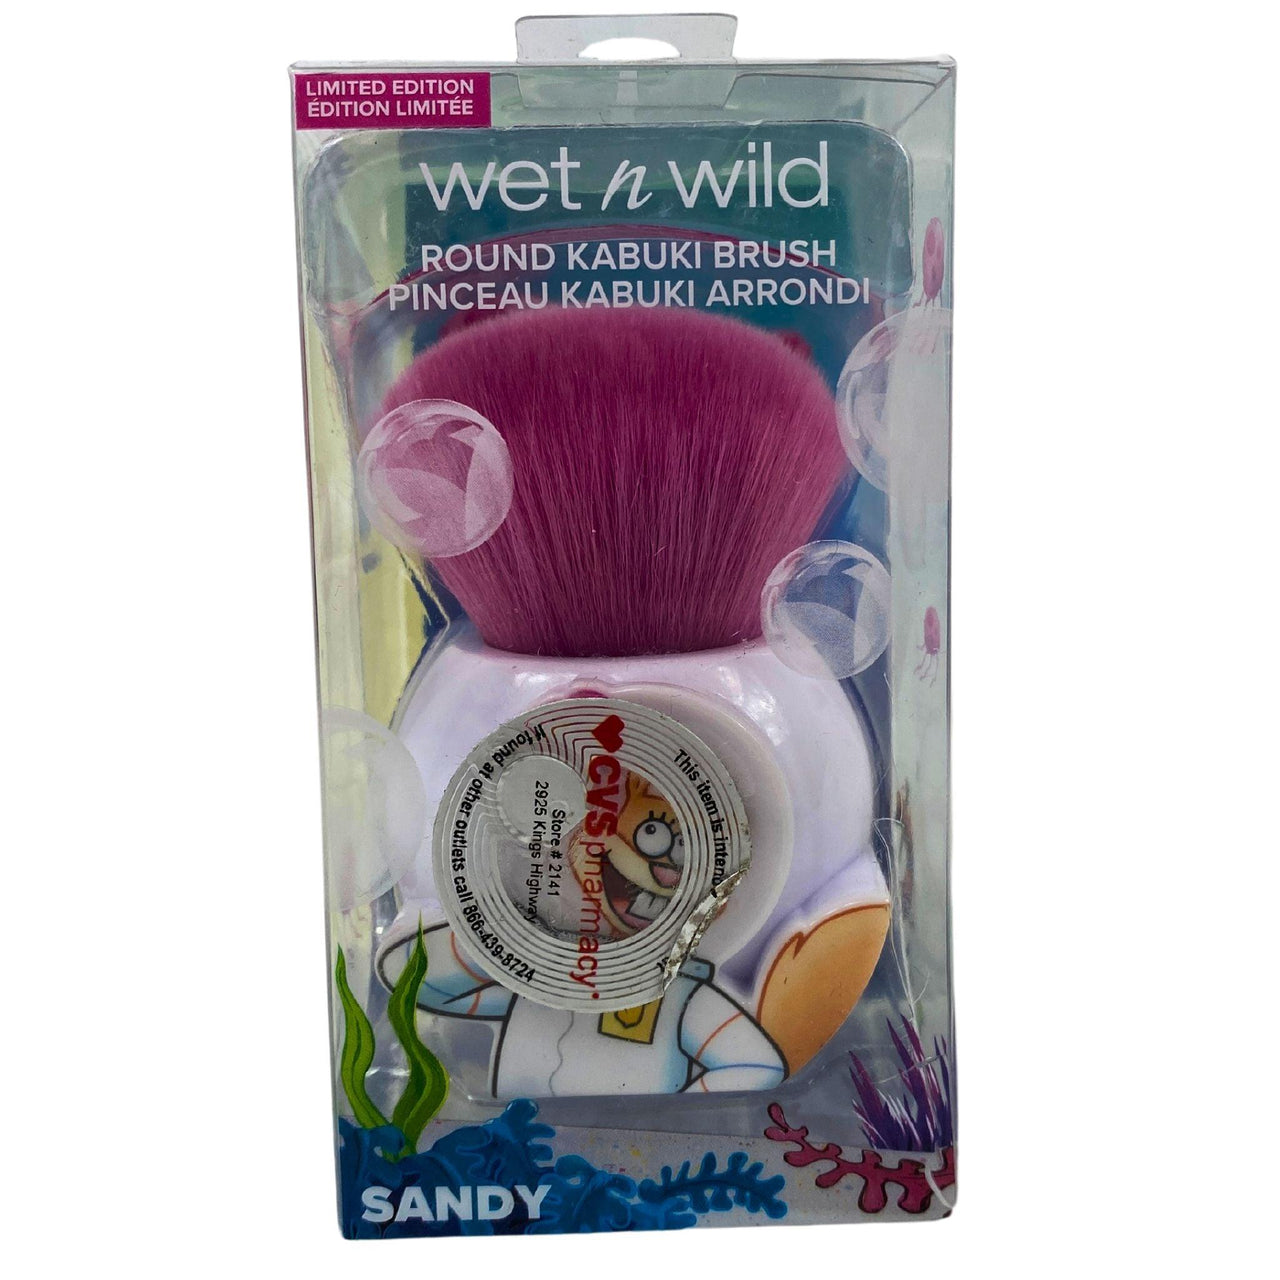 Spongebob Squarepants x Wet n Wild "Sandy" Round Kabuki Brush (25 Pcs Lot) - Discount Wholesalers Inc